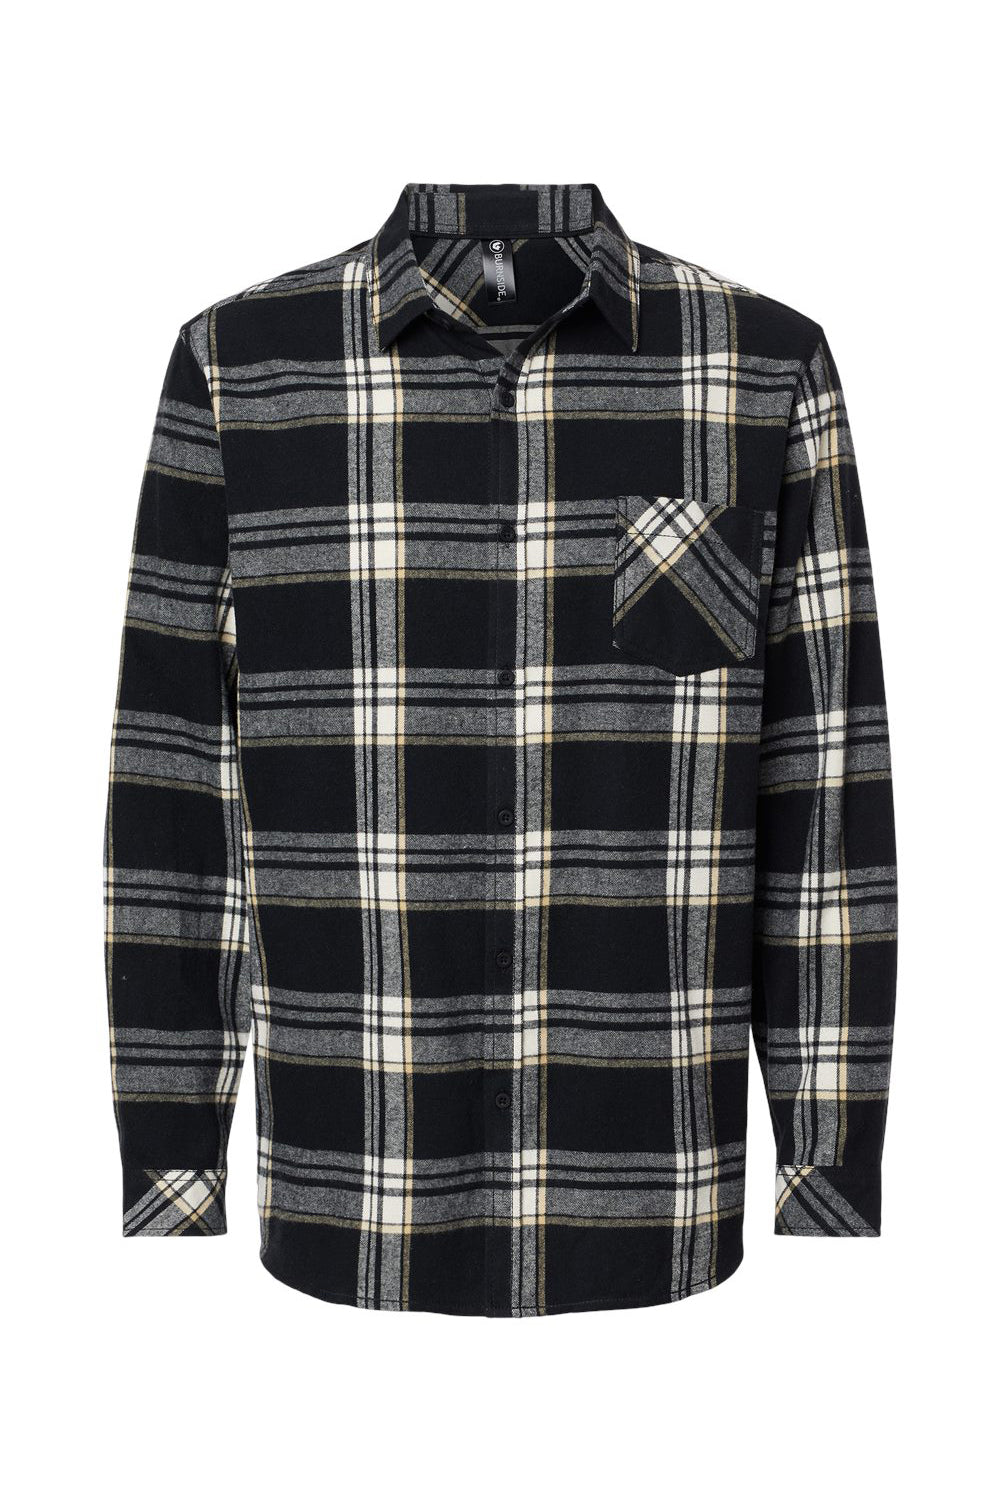 Burnside B8212 Mens Flannel Long Sleeve Button Down Shirt w/ Pocket Black/Ecru Flat Front